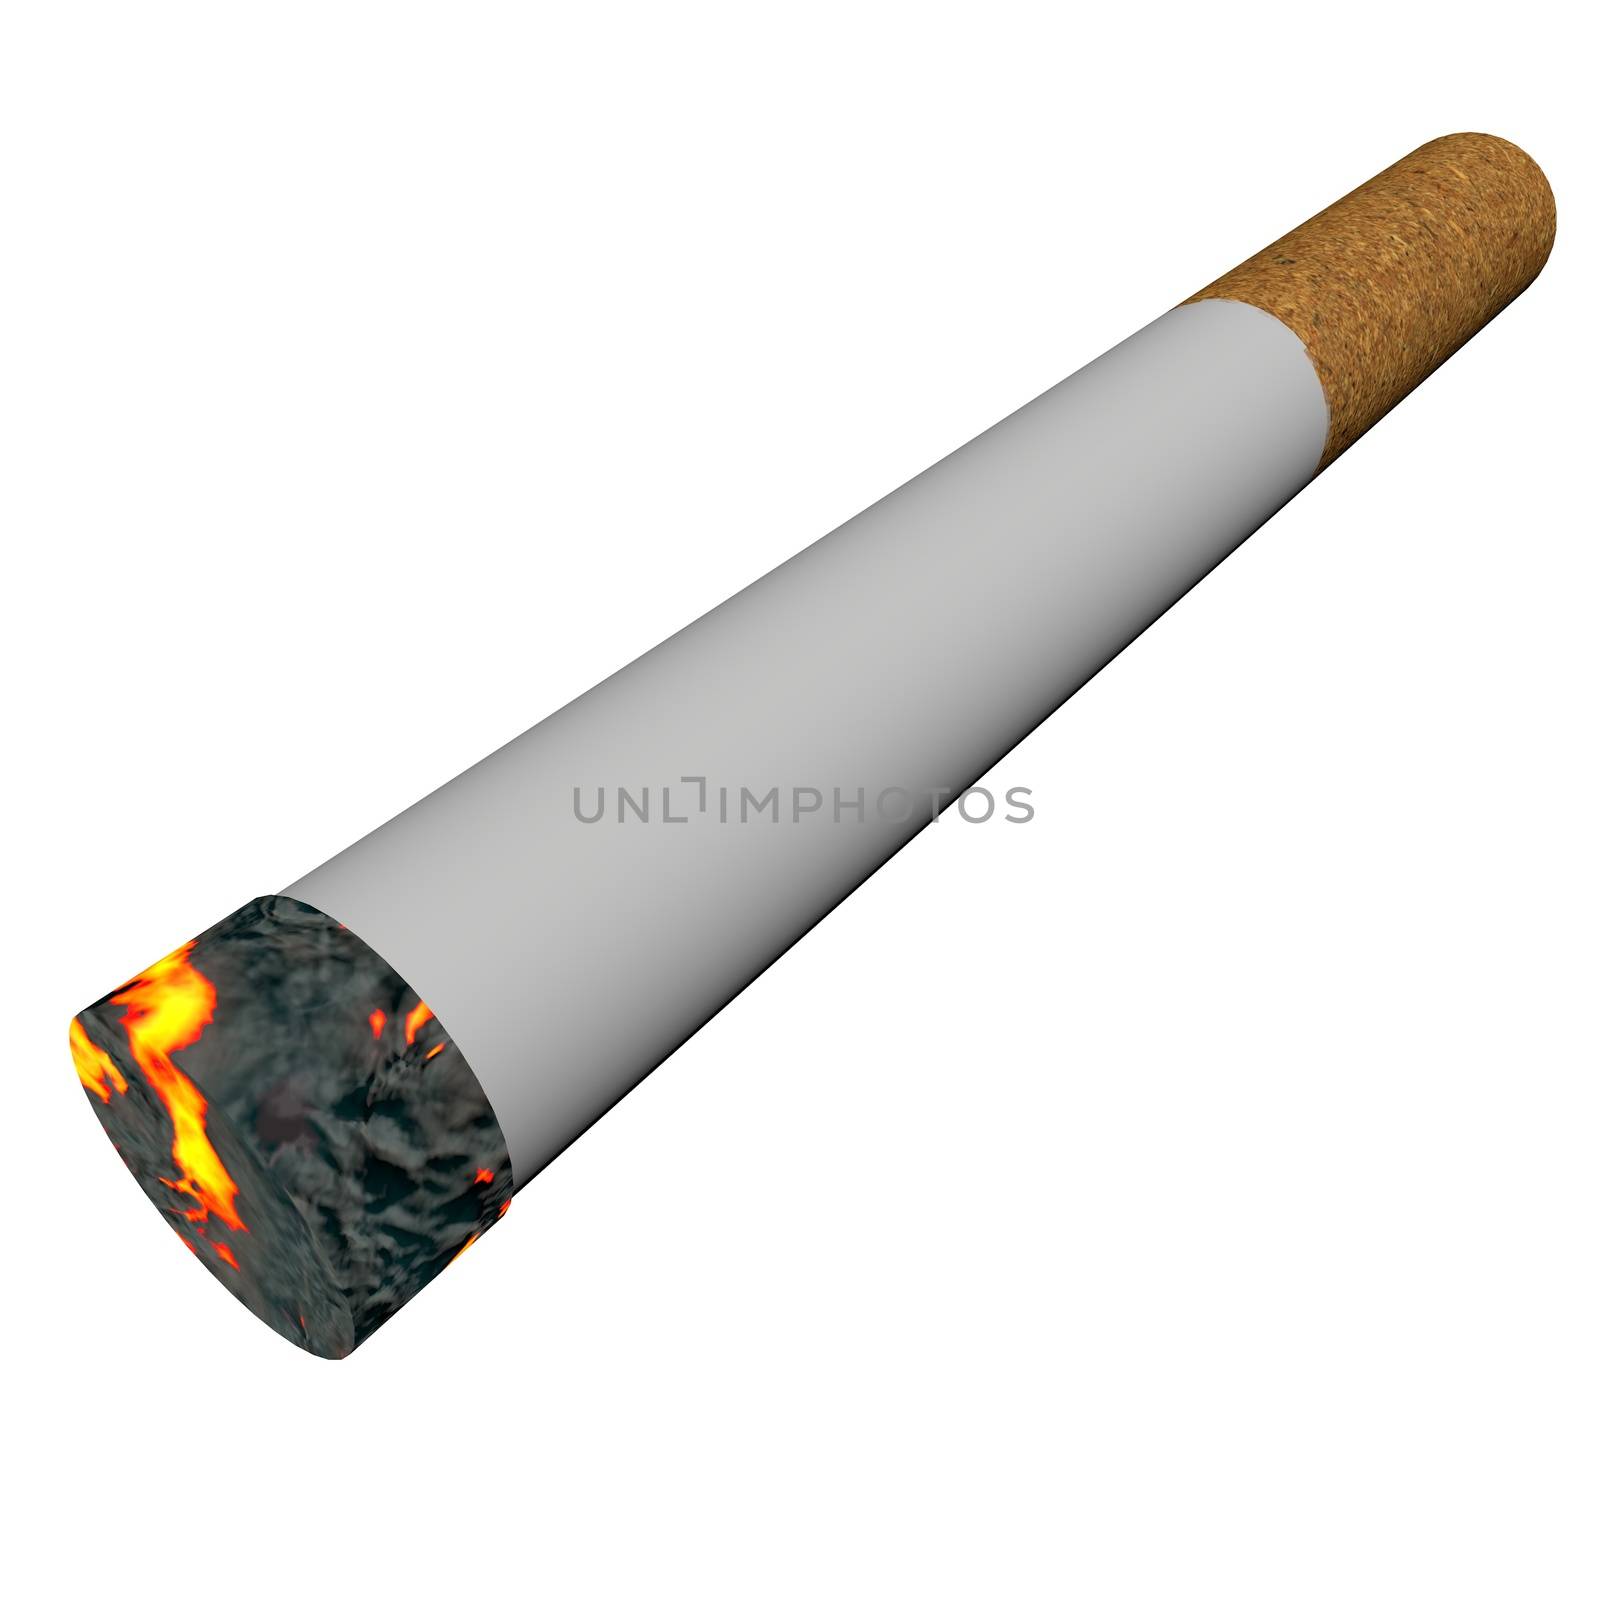 Cigarette by Koufax73